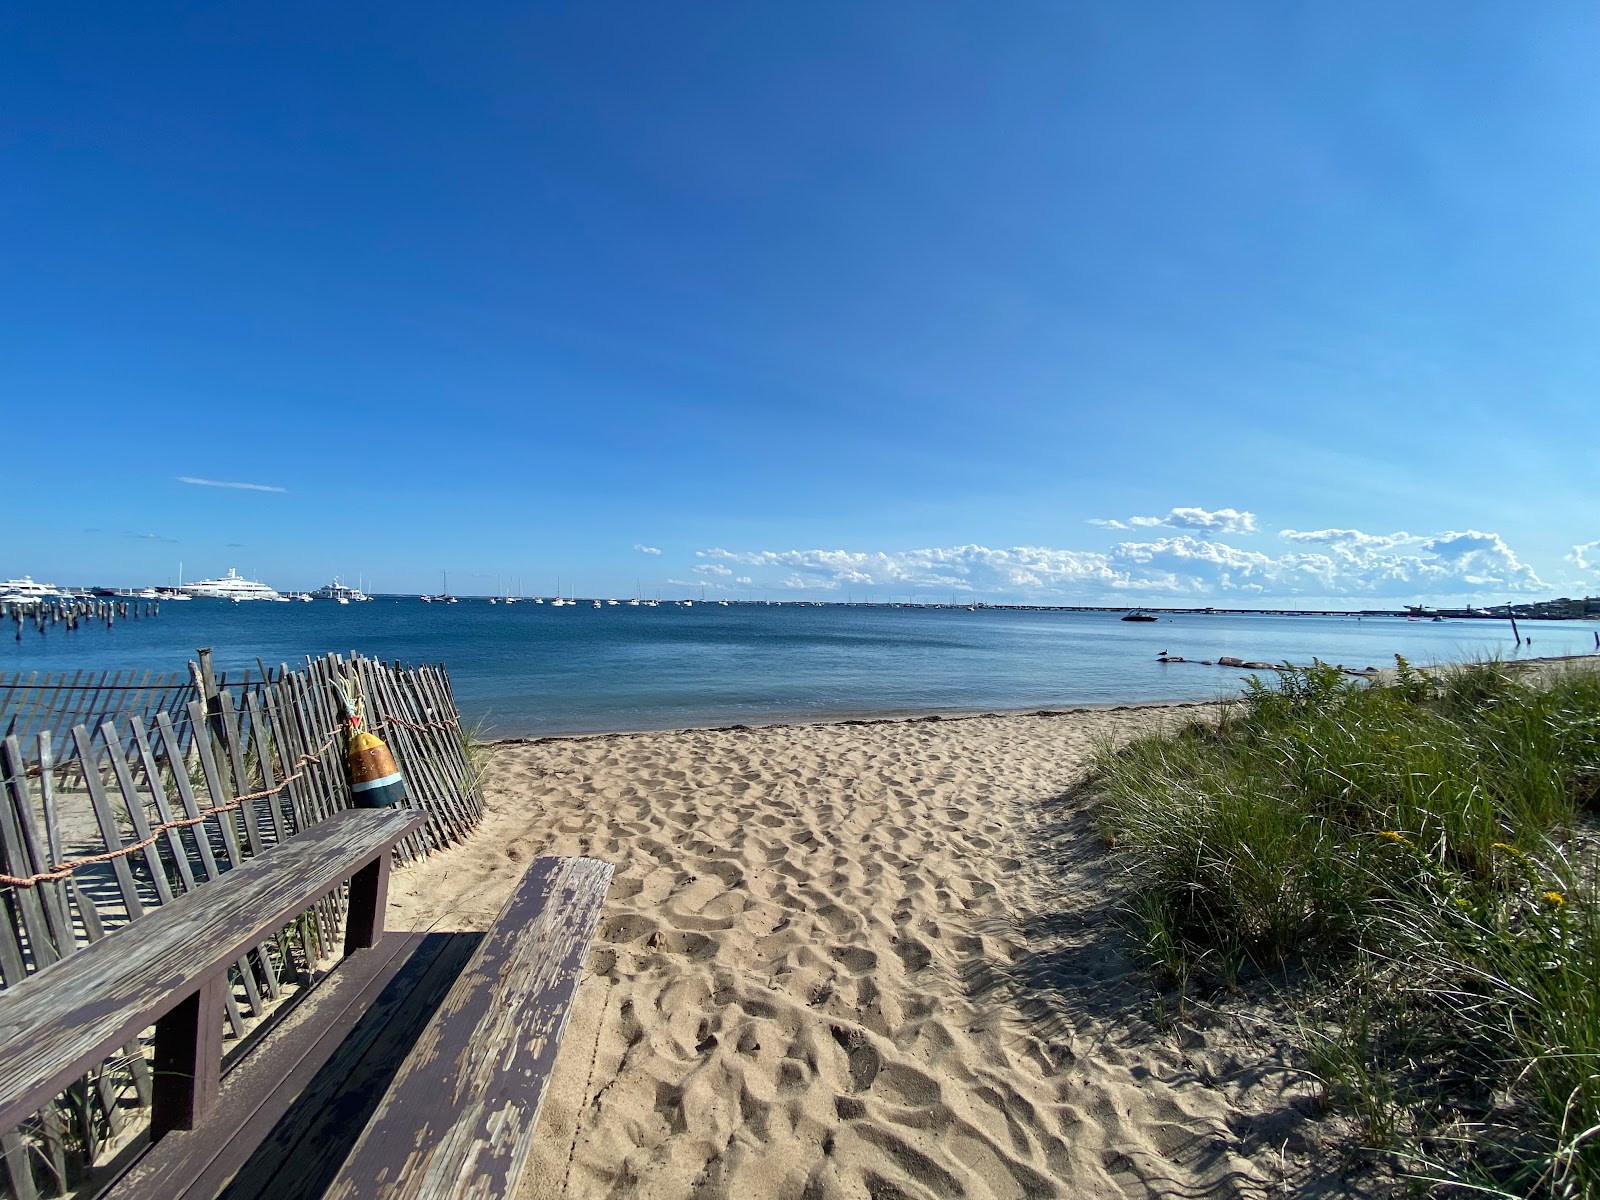 Provincetown beach II'in fotoğrafı geniş plaj ile birlikte